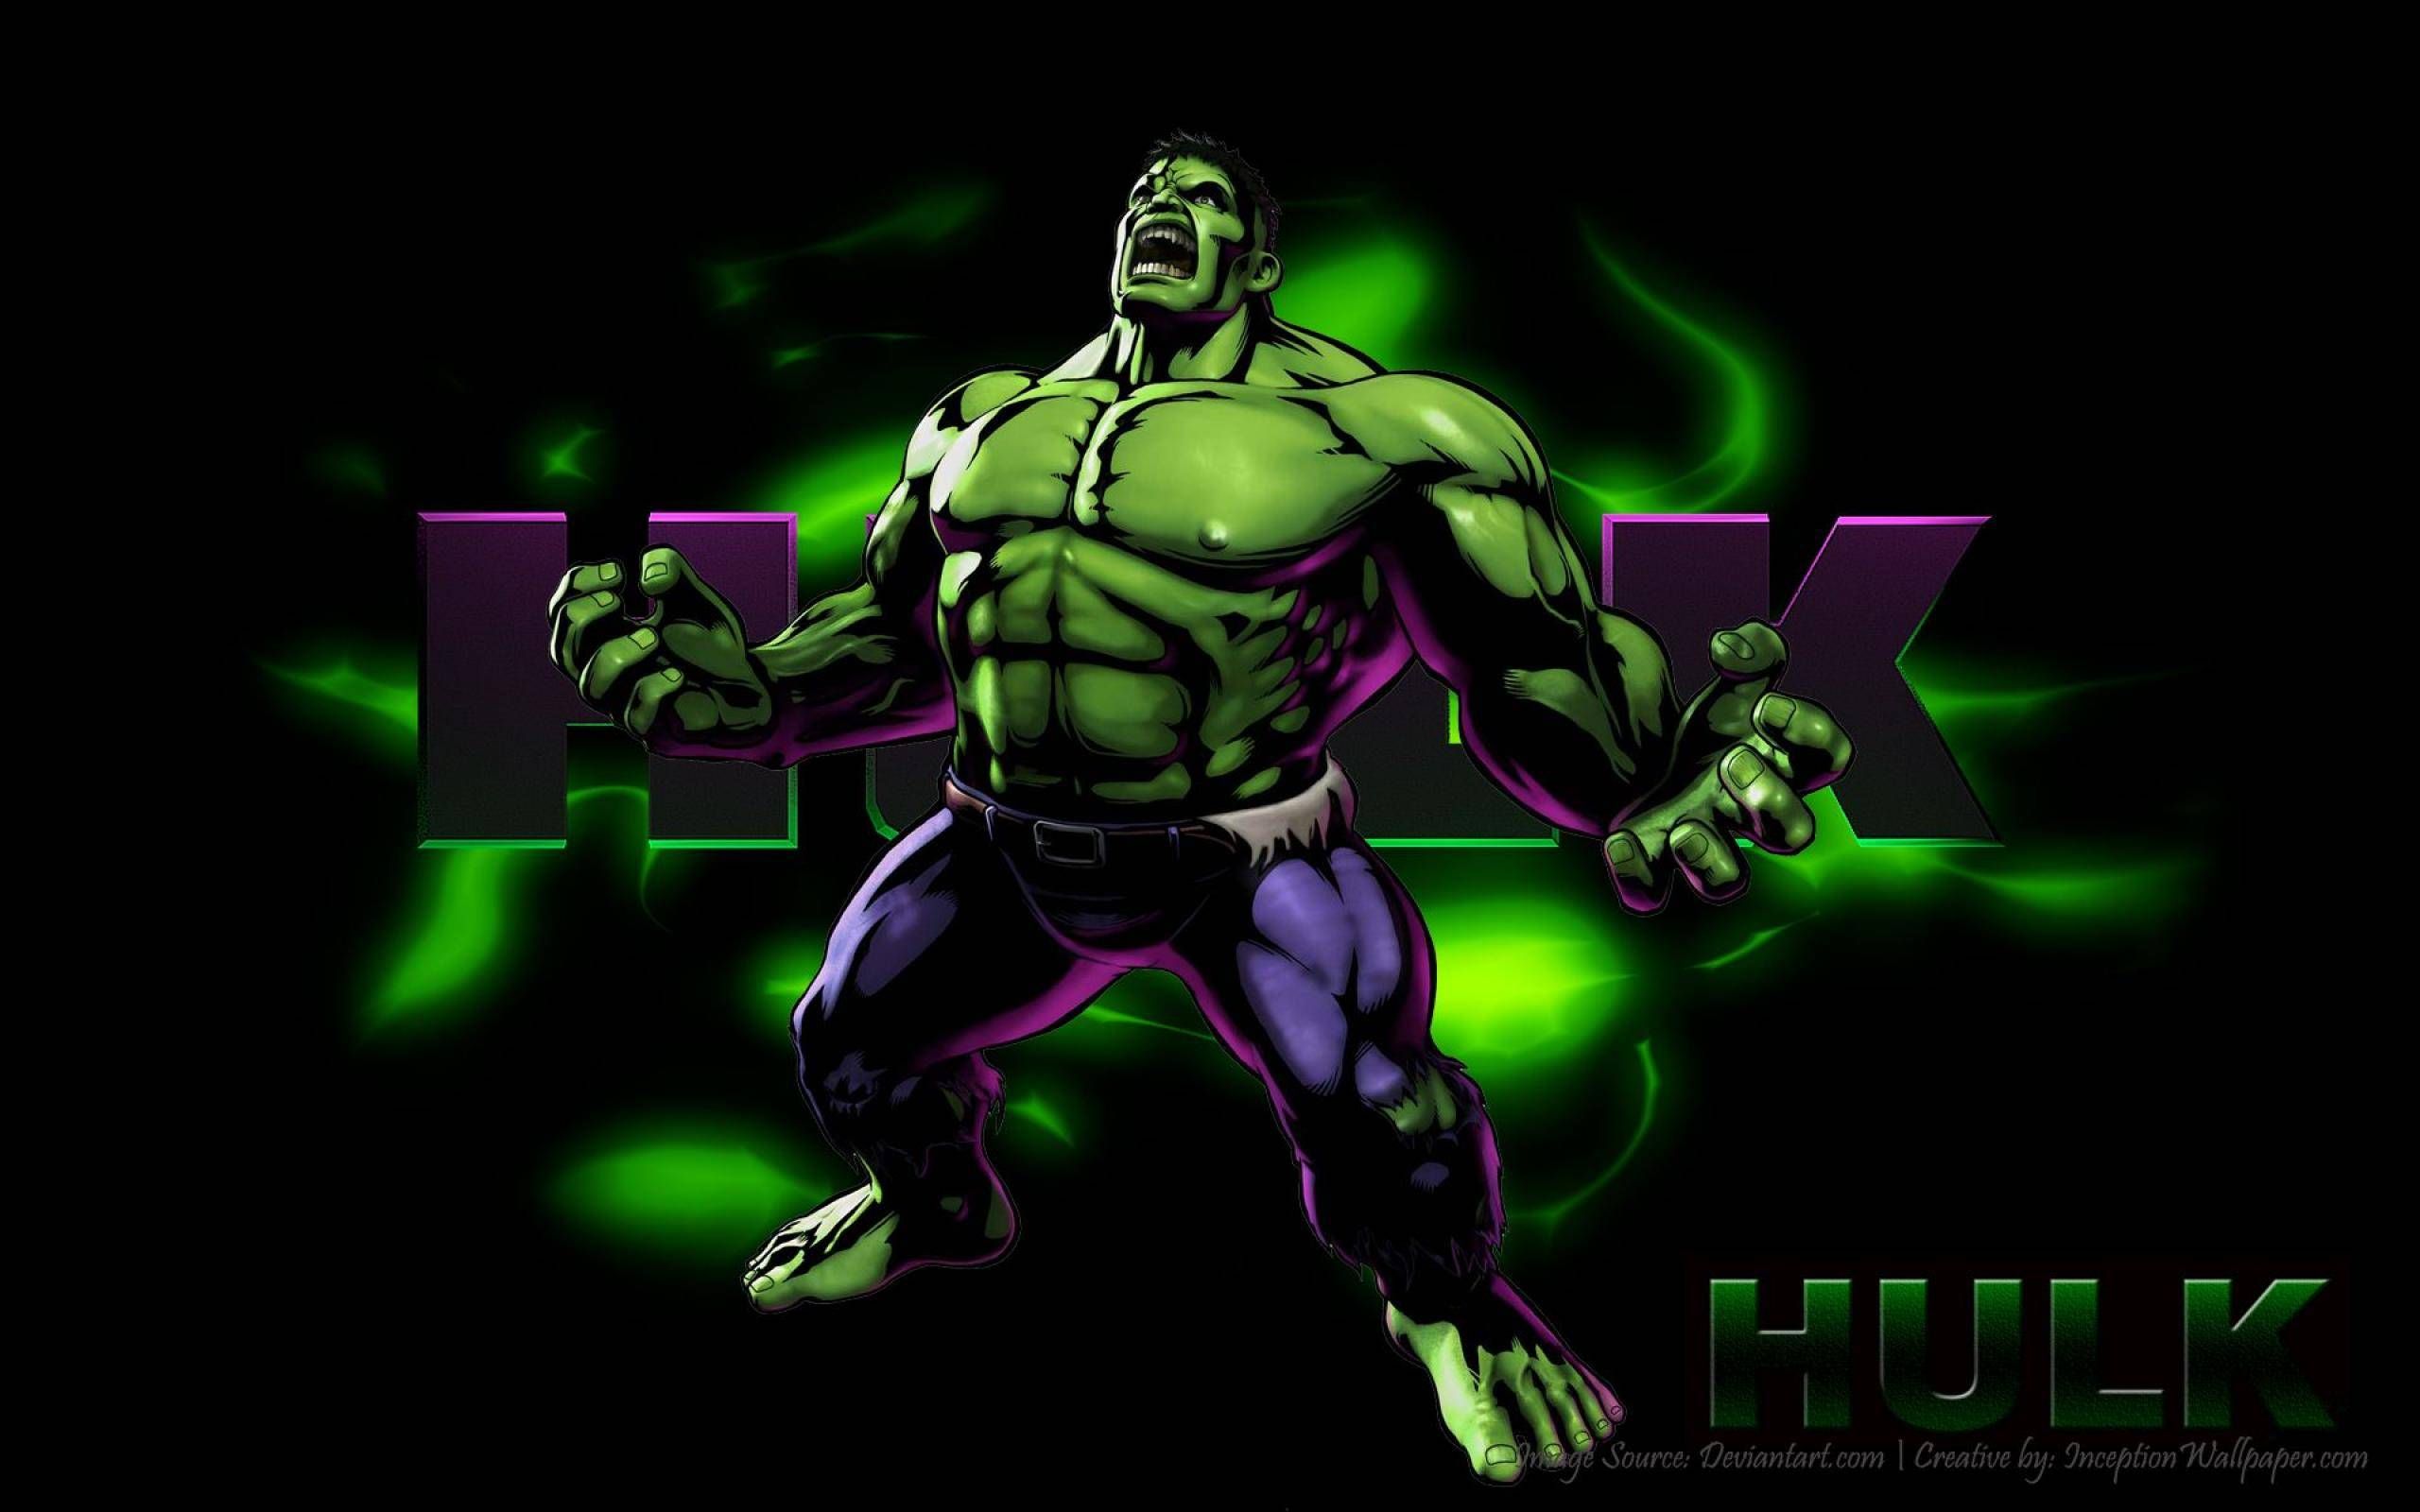 Hulk #Fan #Art. (3D Wallpaper HD) By: Inception Wallpaper.com. ÅWESOMENESS!!!™ ÅÅÅ+. Hulk, Hulk Powers, Superhero